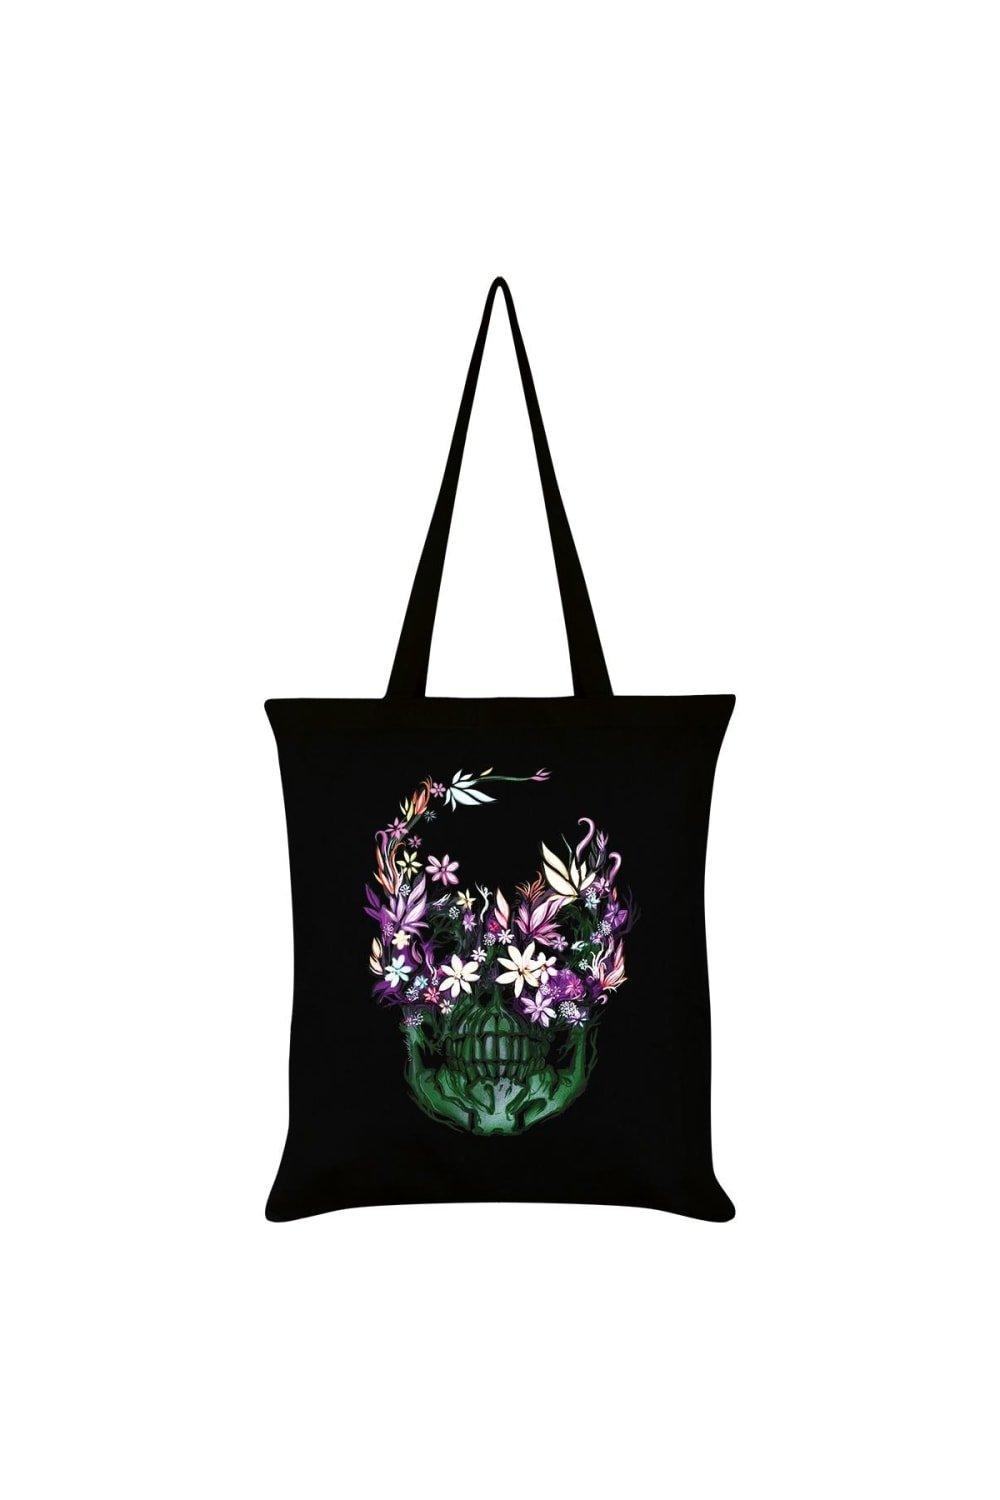 Большая сумка-тоут Skull Bloom Unorthodox Collective, черный